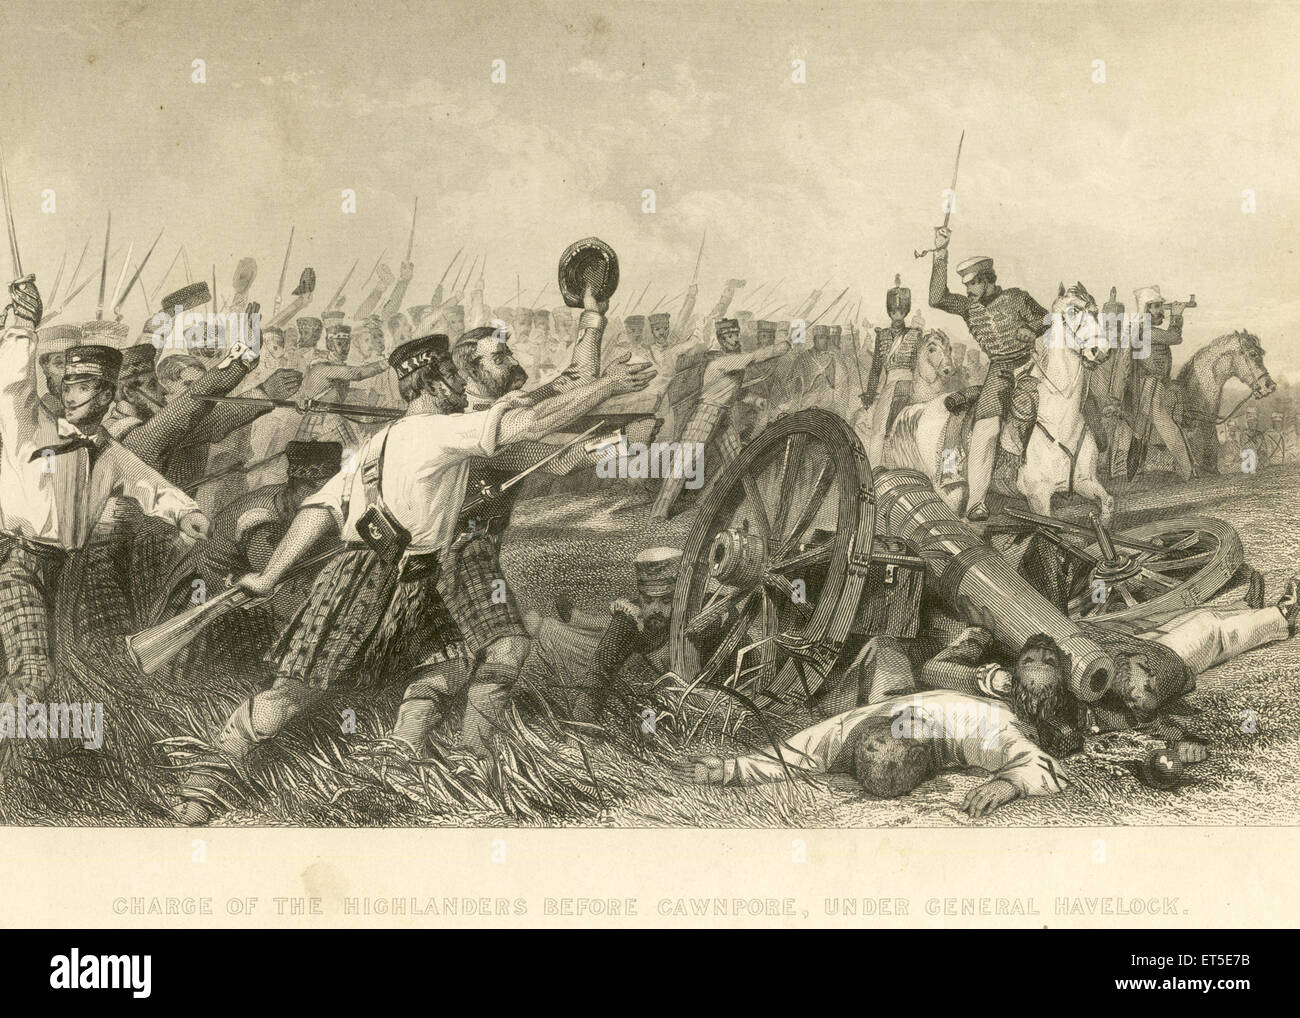 Military and munity mutiny views charge of Highlanders before Chwnpore under General Havelock ; Kanpur ; Uttar Pradesh ; India Stock Photo